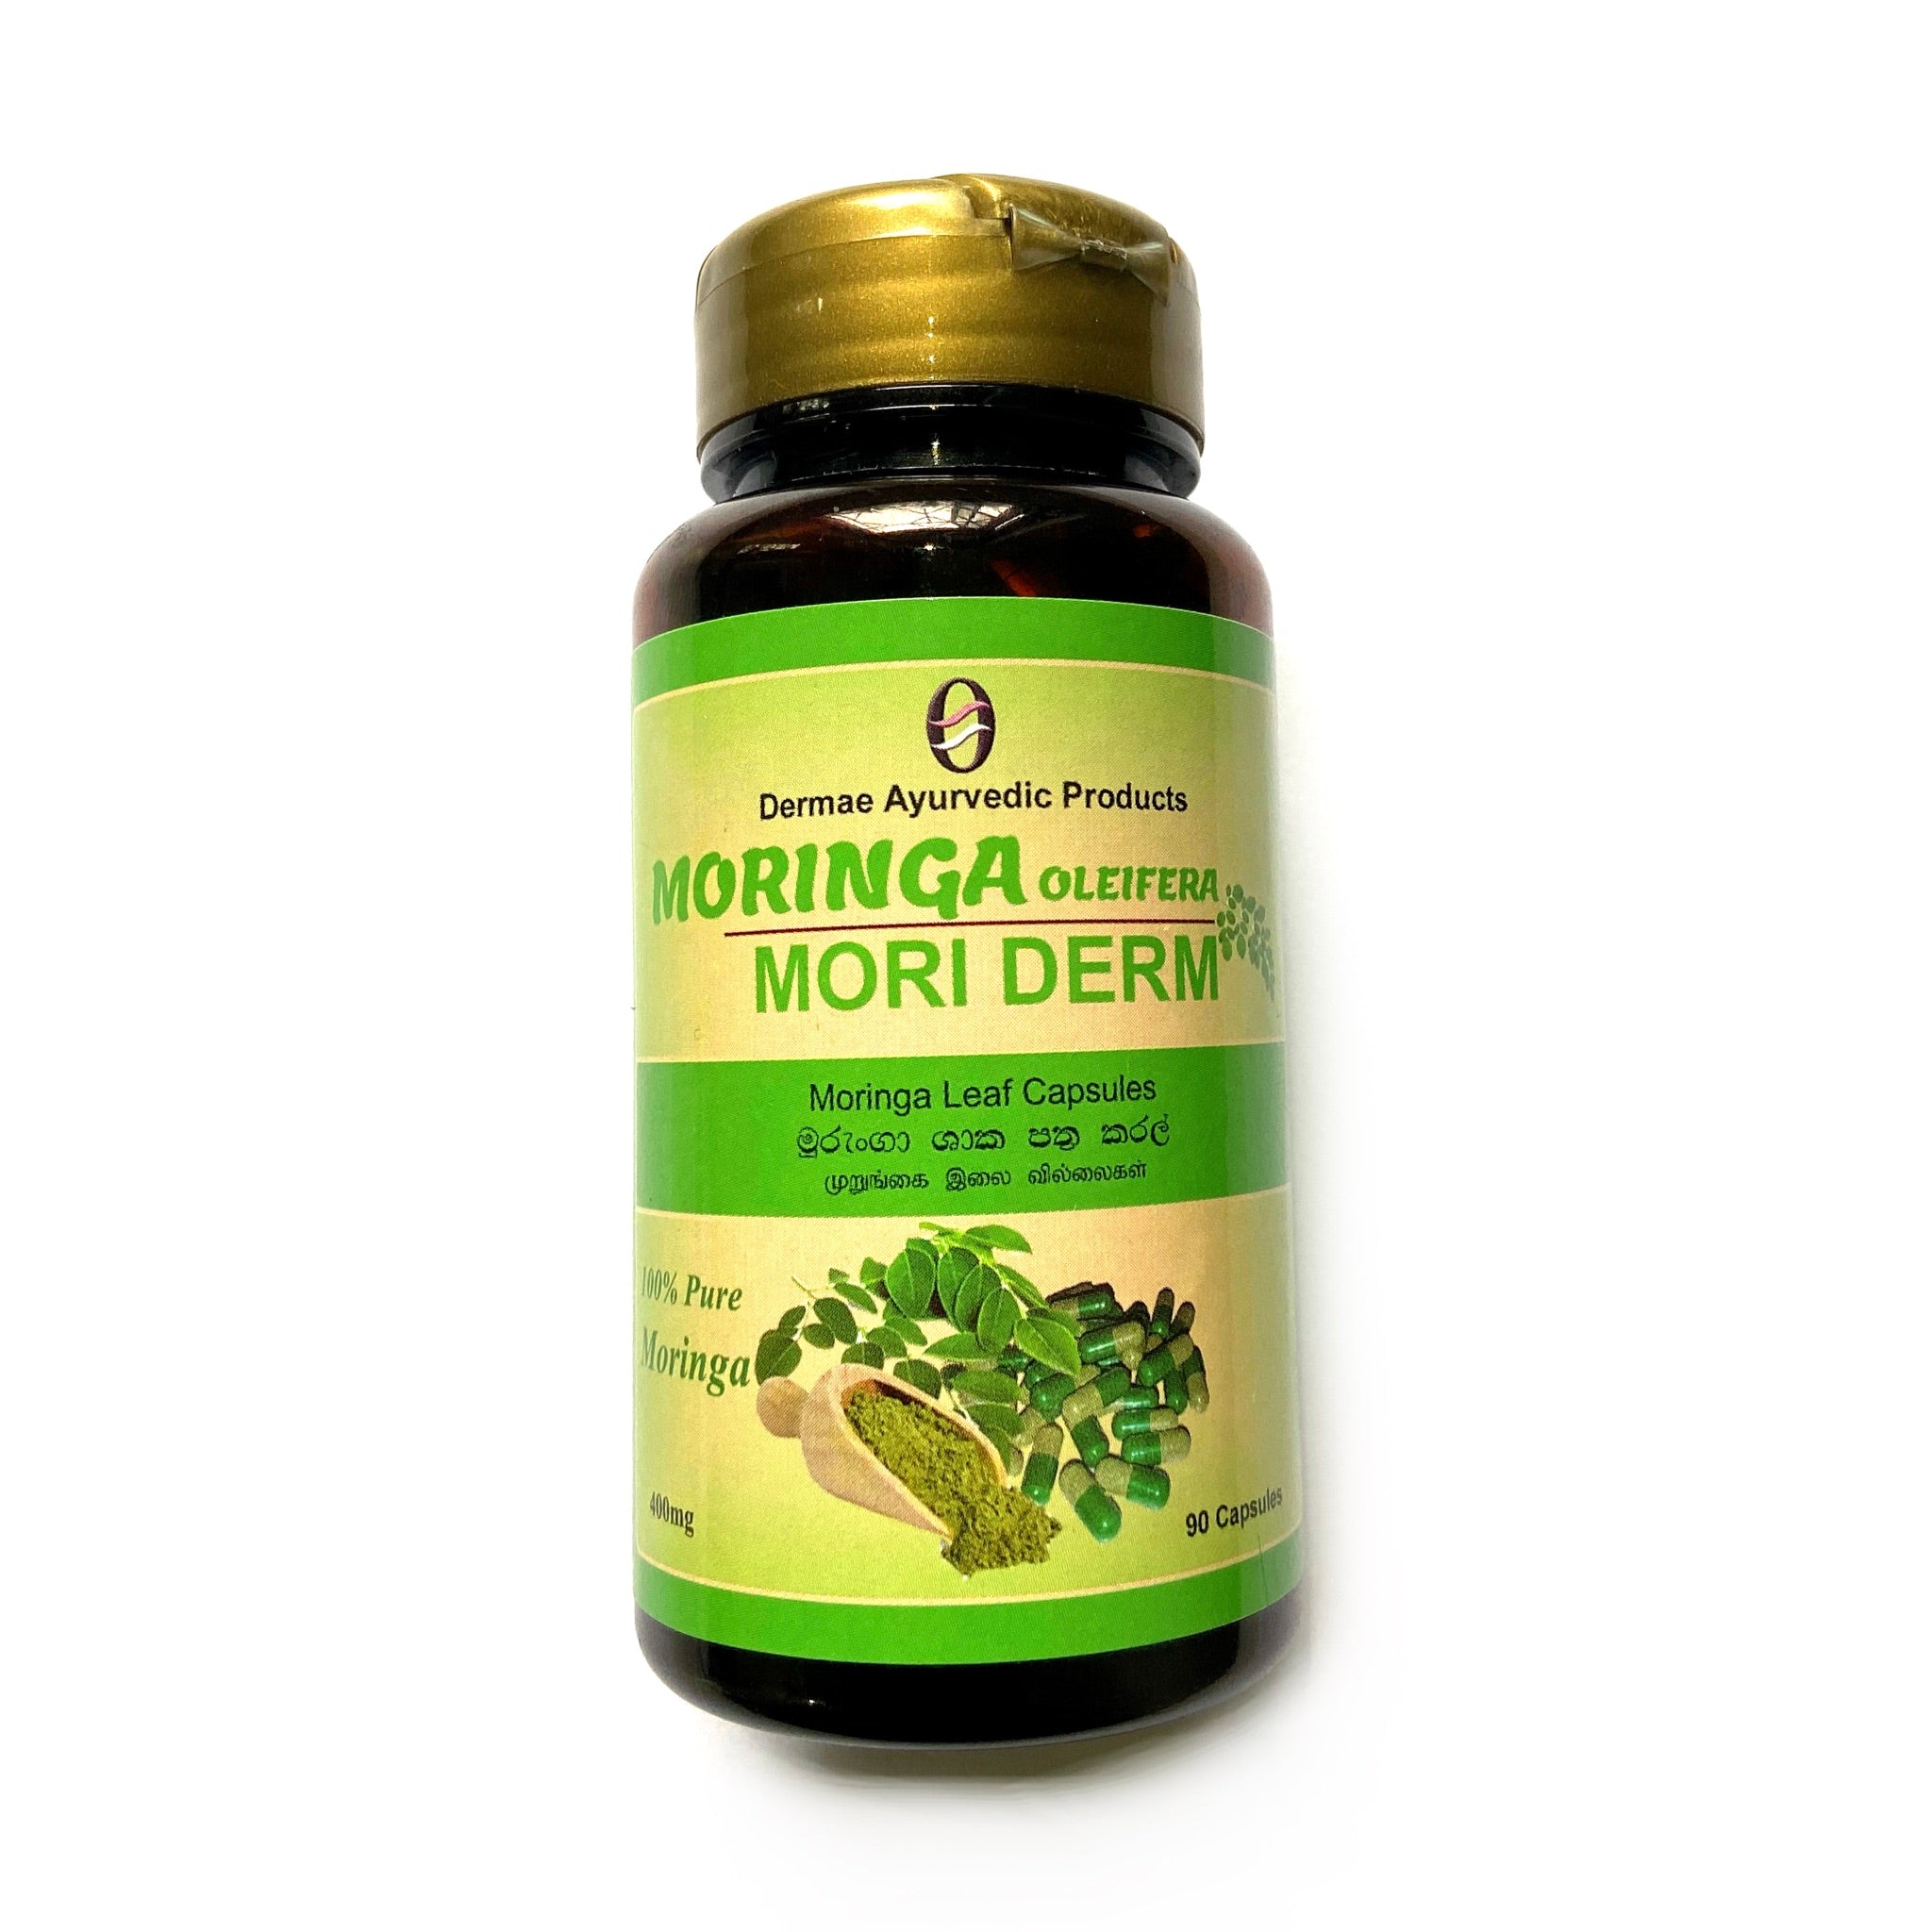 MORI DERM (Moringa Leaf Capsule)